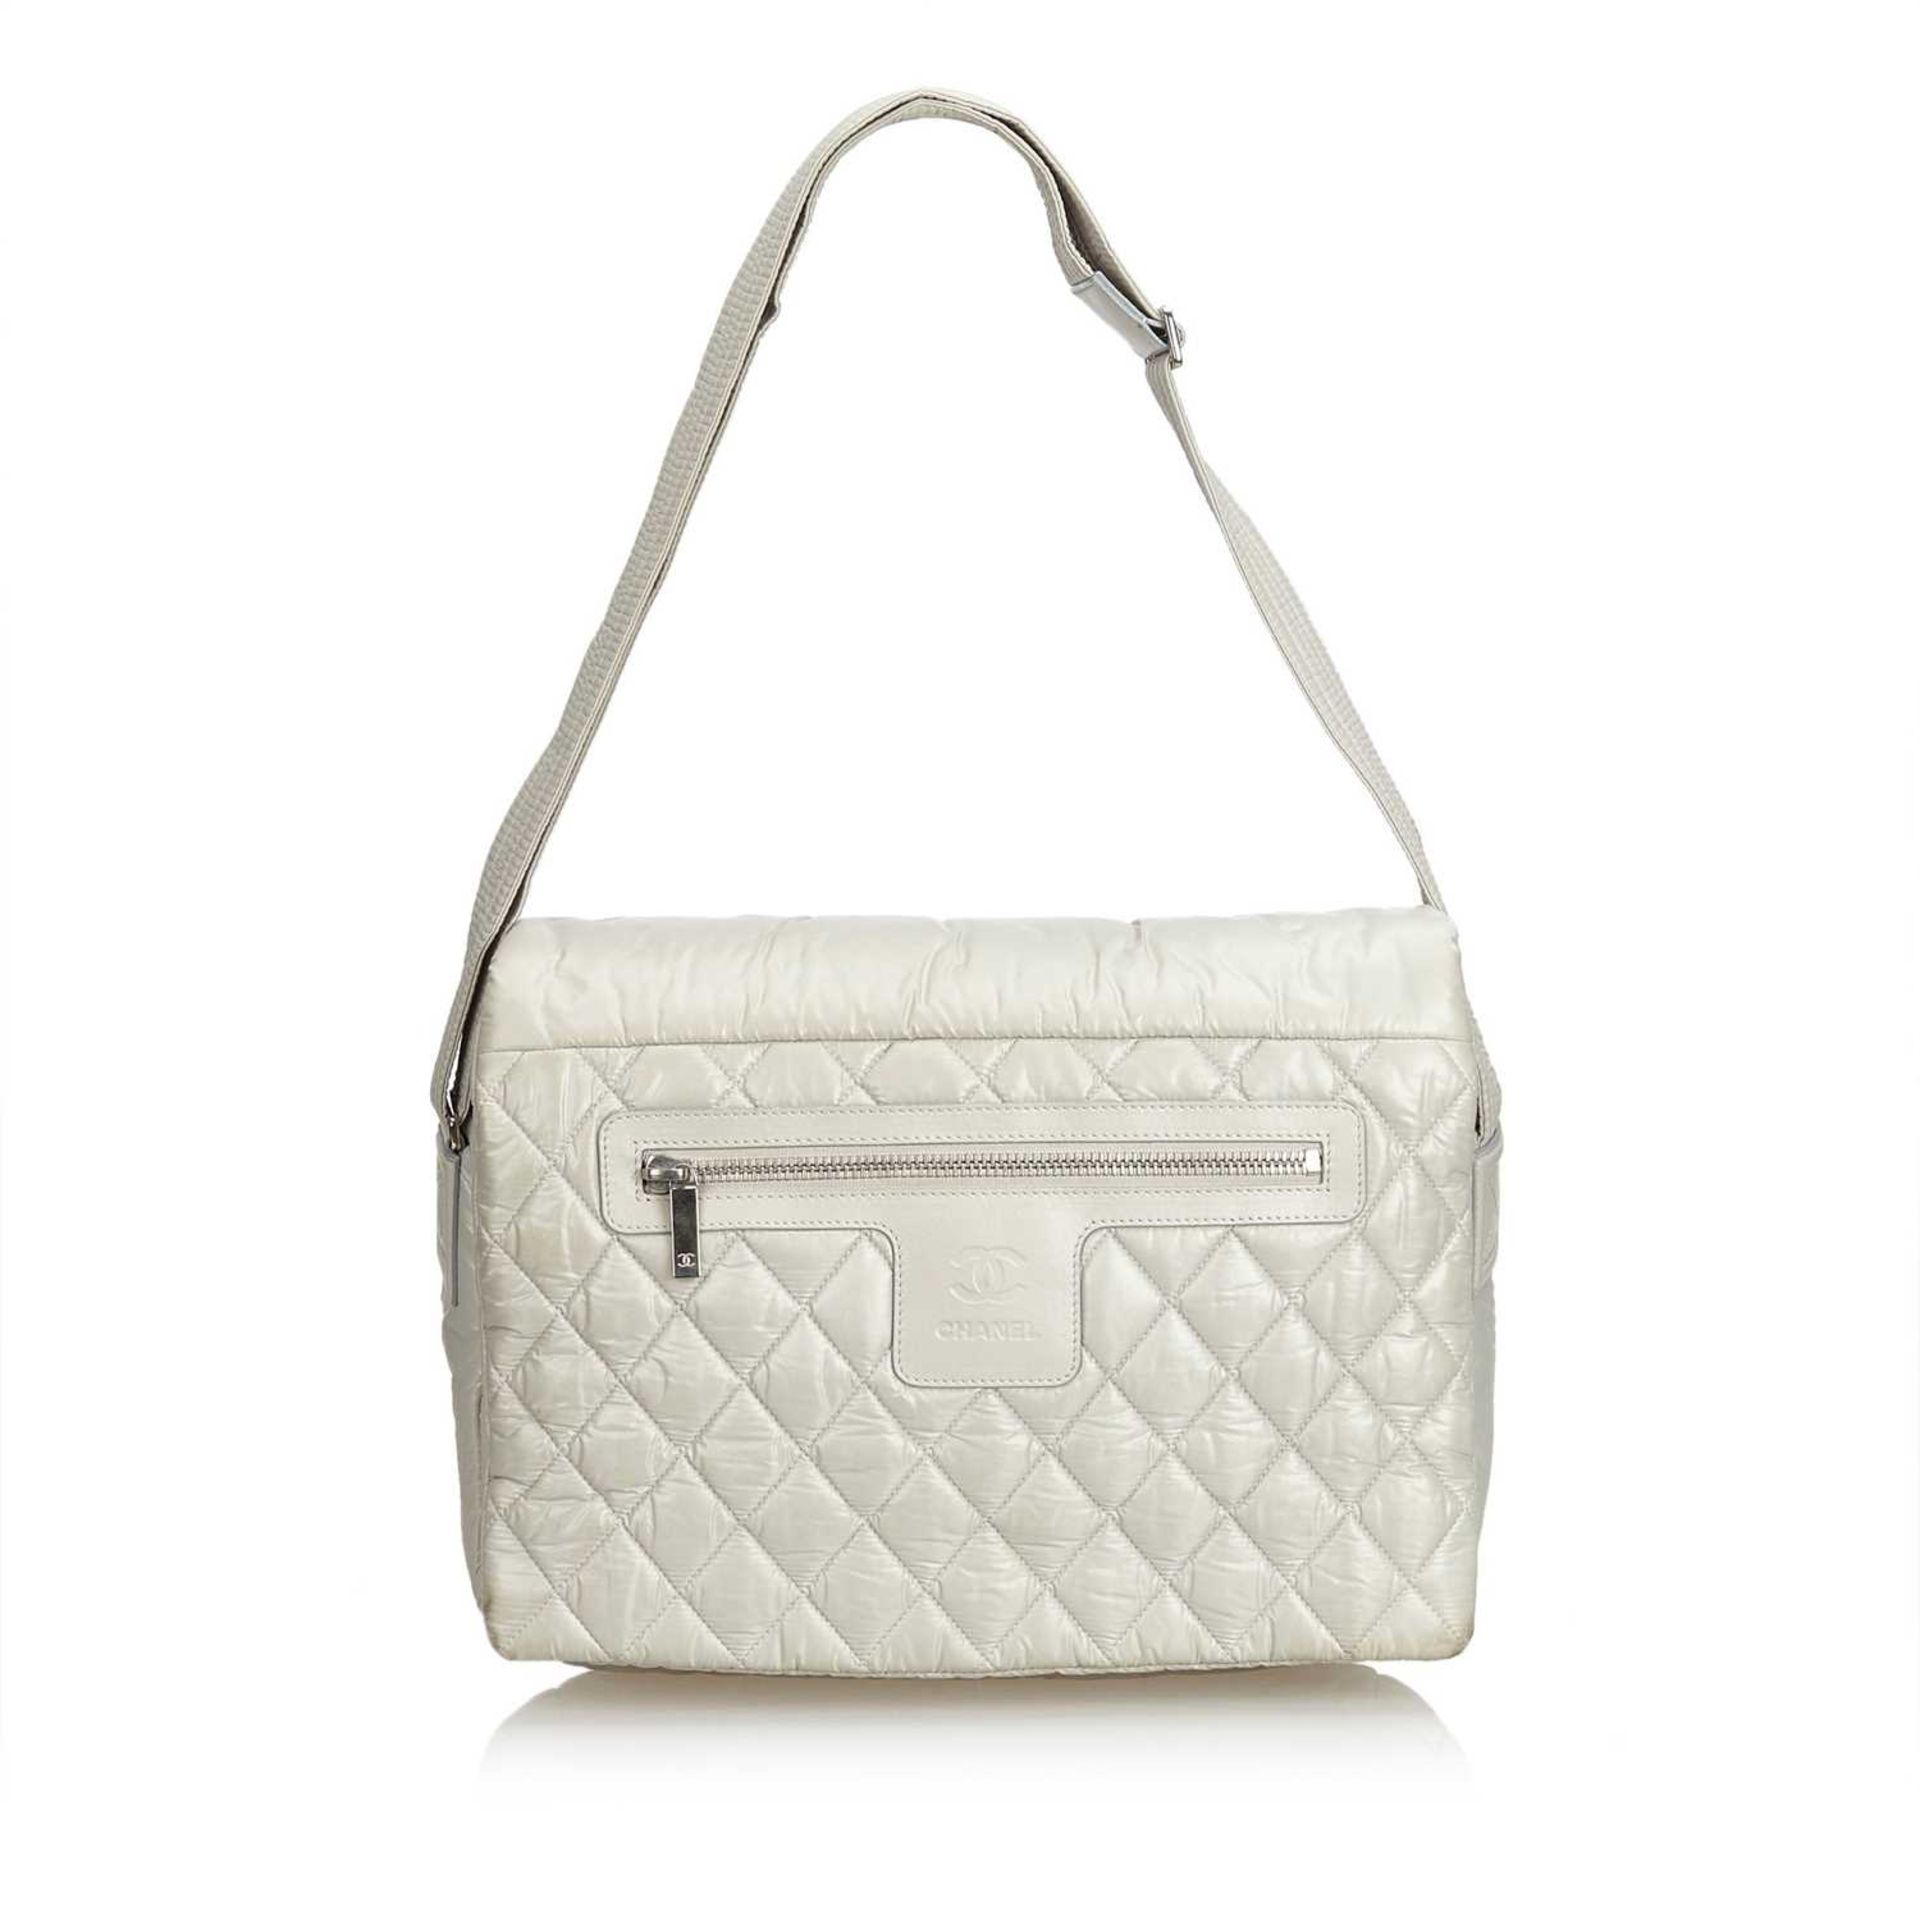 A Chanel Cocoon messenger bag,